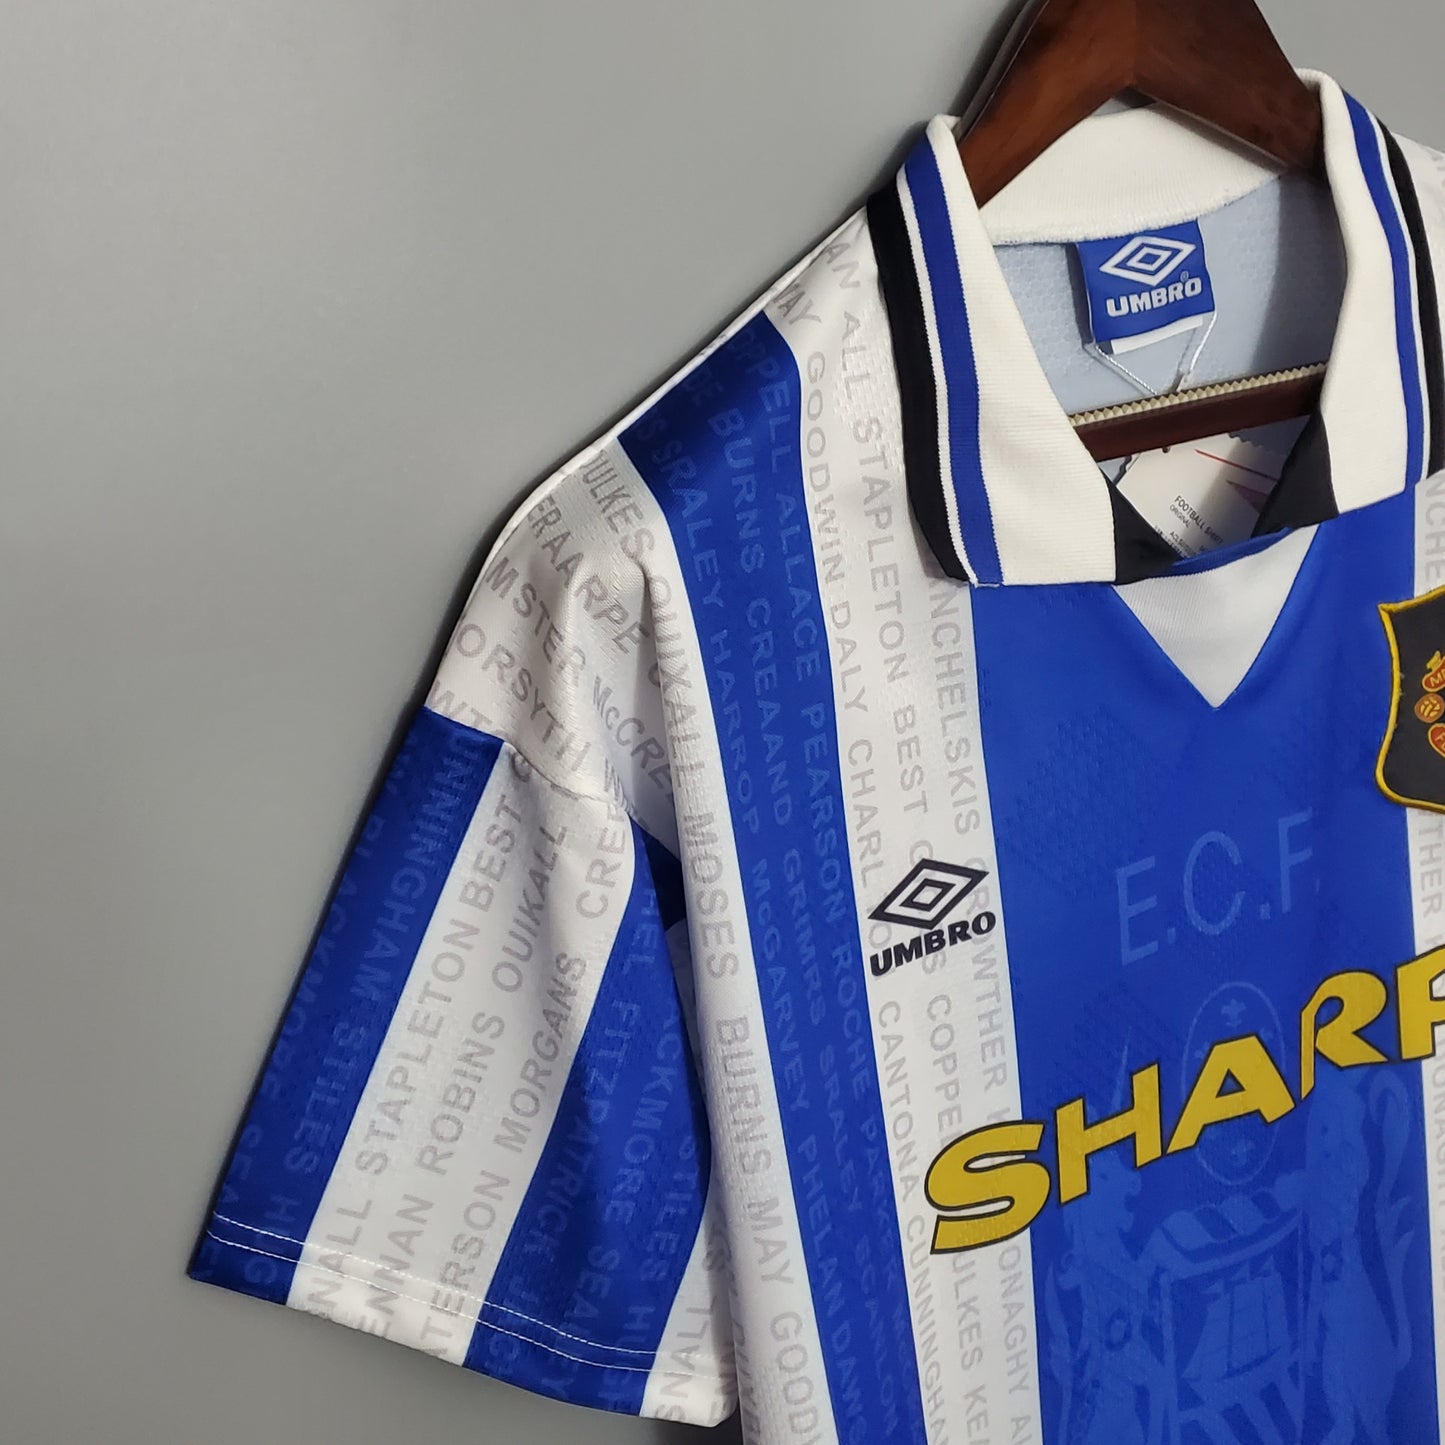 1994-96 Manchester United Away Shirt